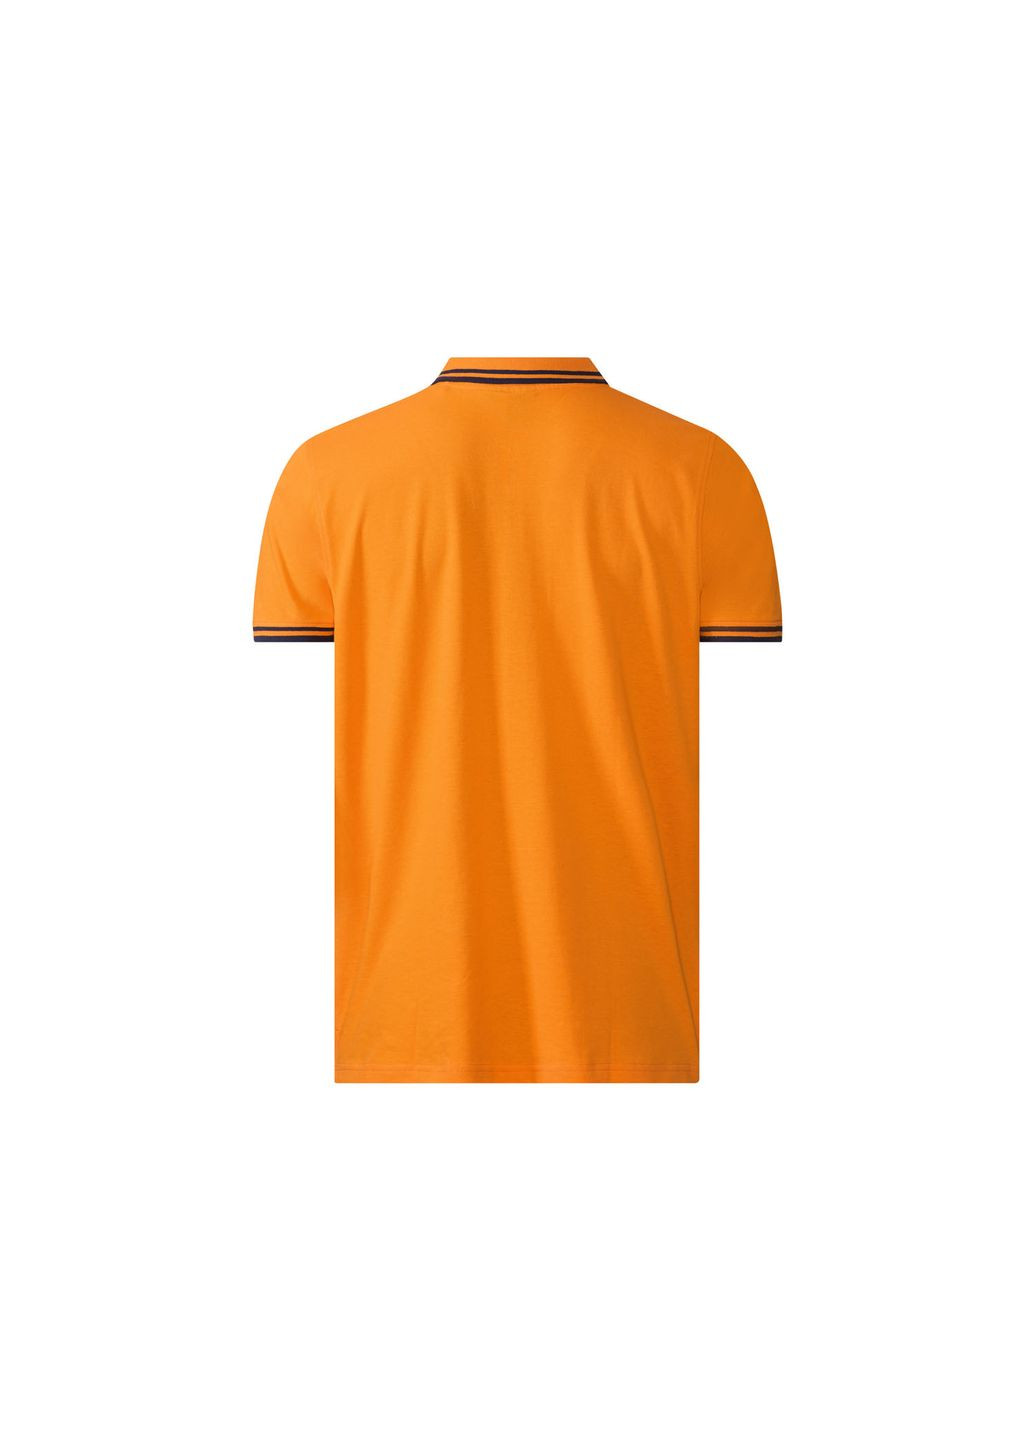 Помаранчева футболка-поло вафельної текстури для чоловіка u.s. grand polo 405659 помаранч Livergy